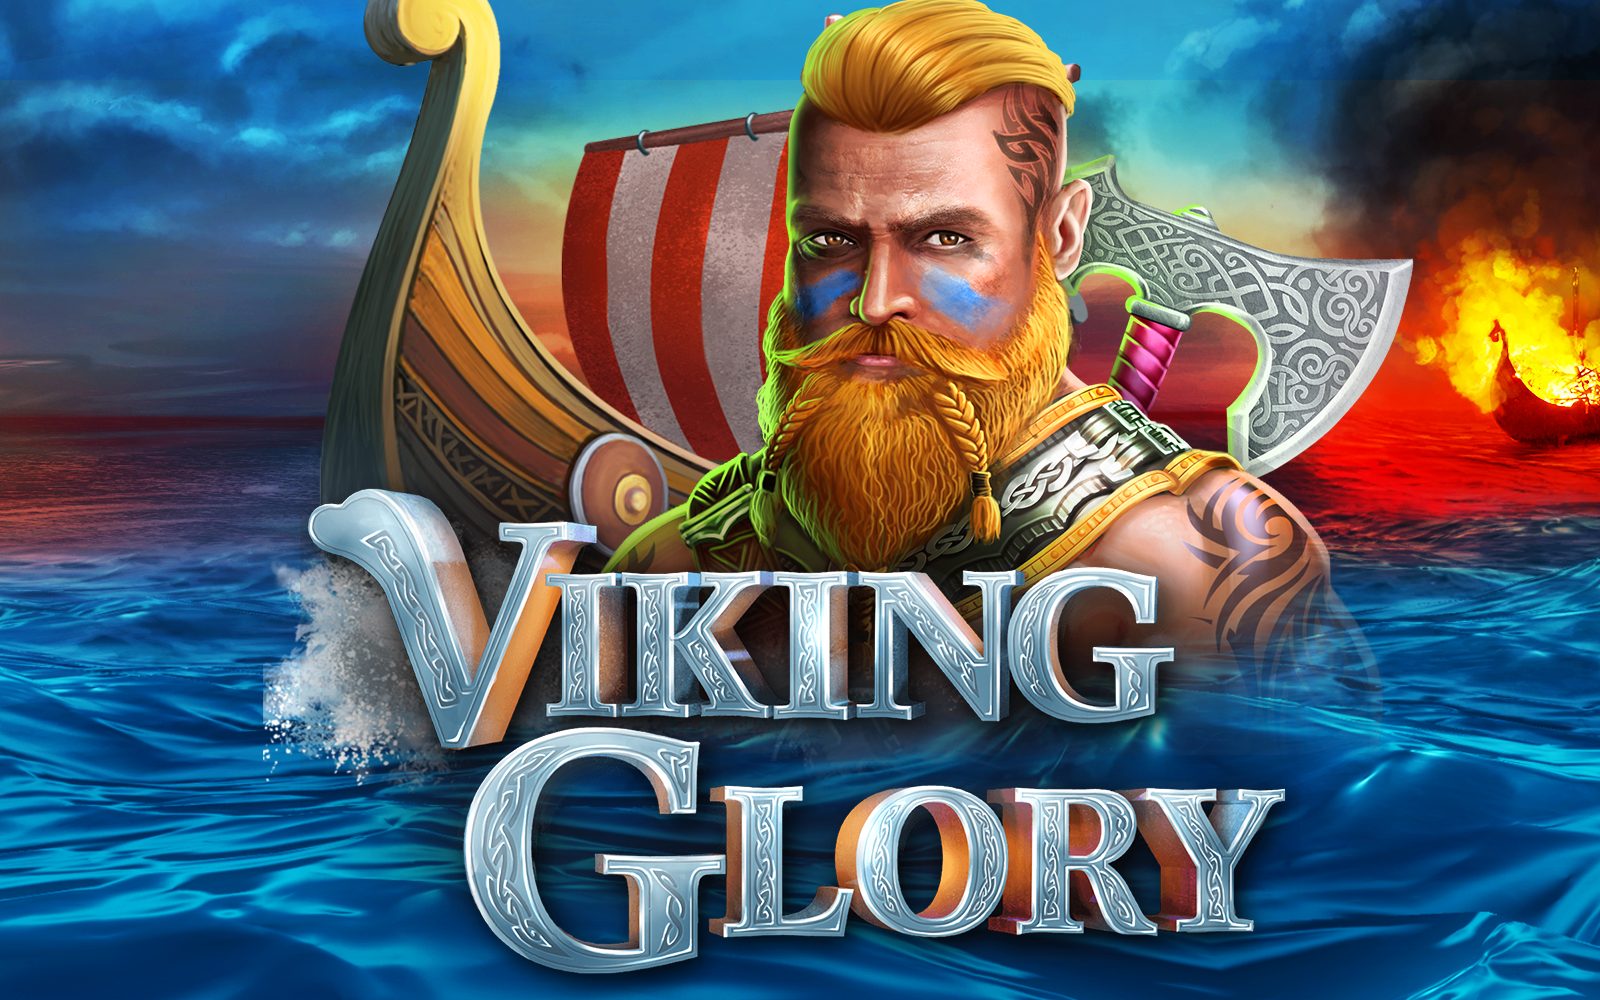 Vikings video slot free